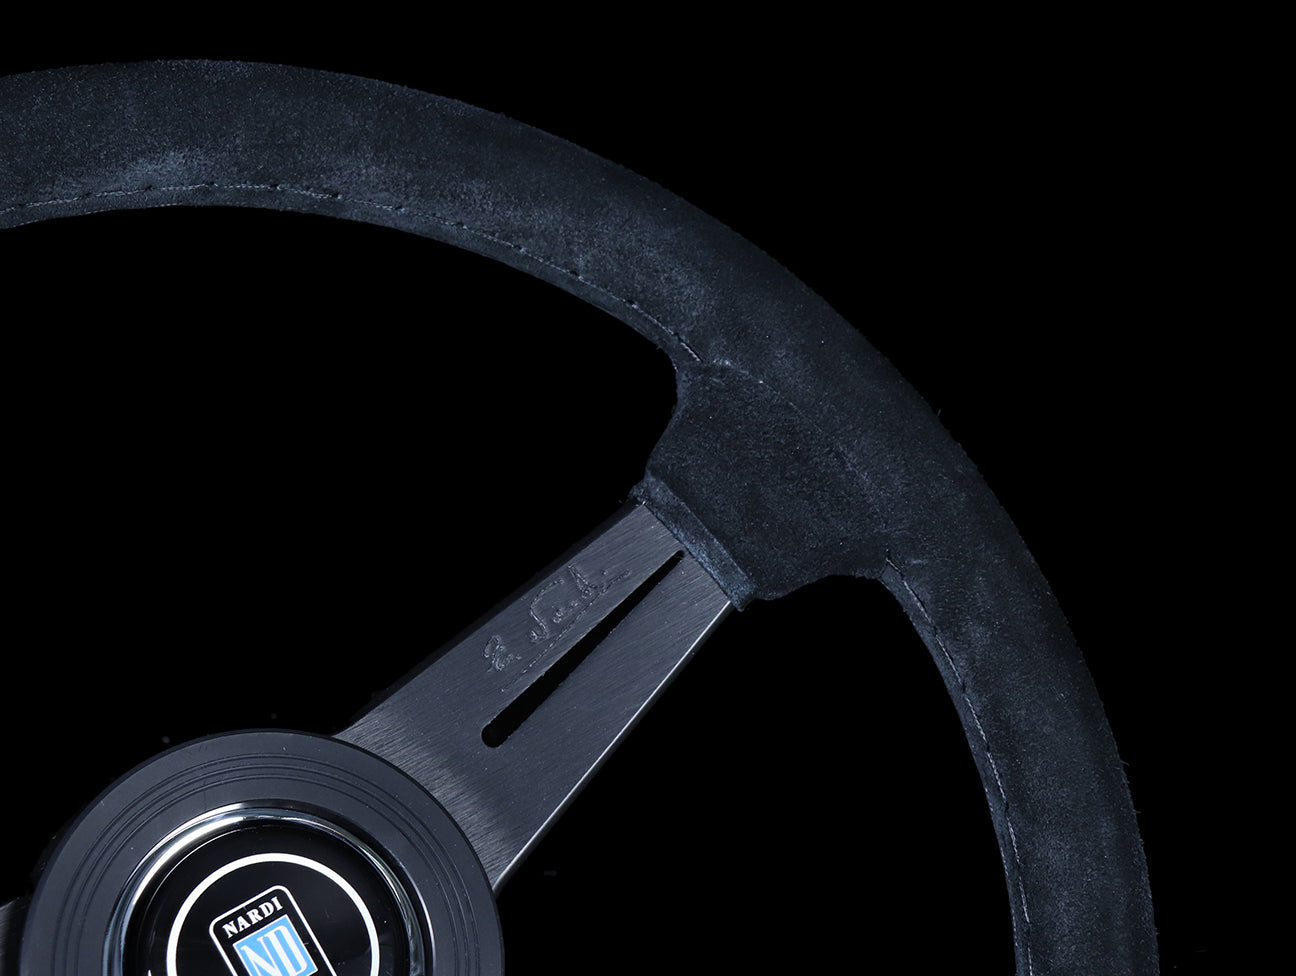 Nardi Classic 330mm Steering Wheel - Black Suede / Black Stitch